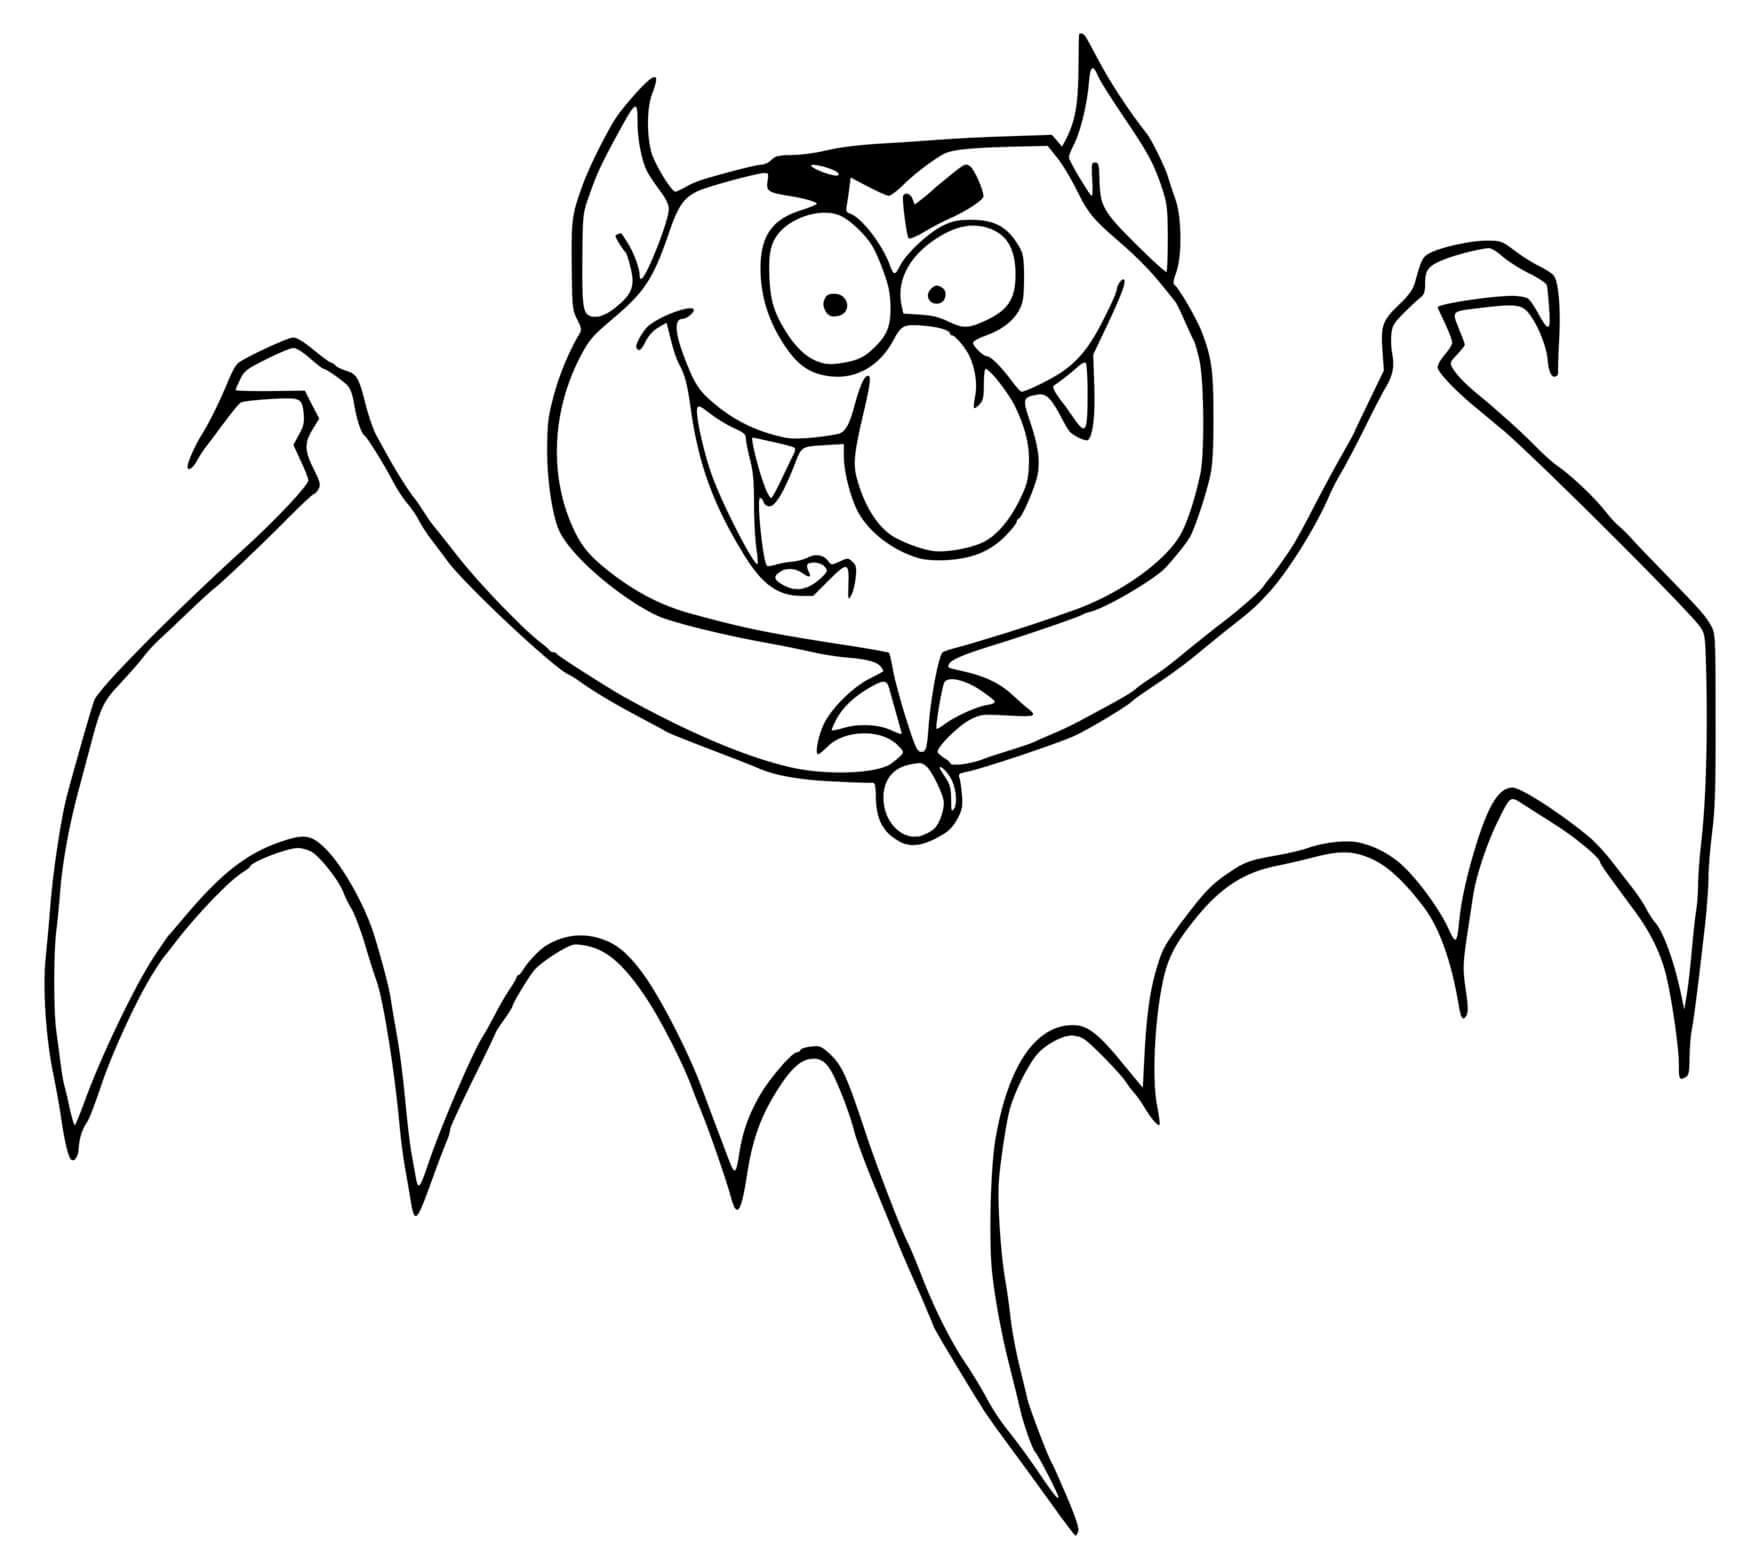 Devil Bat